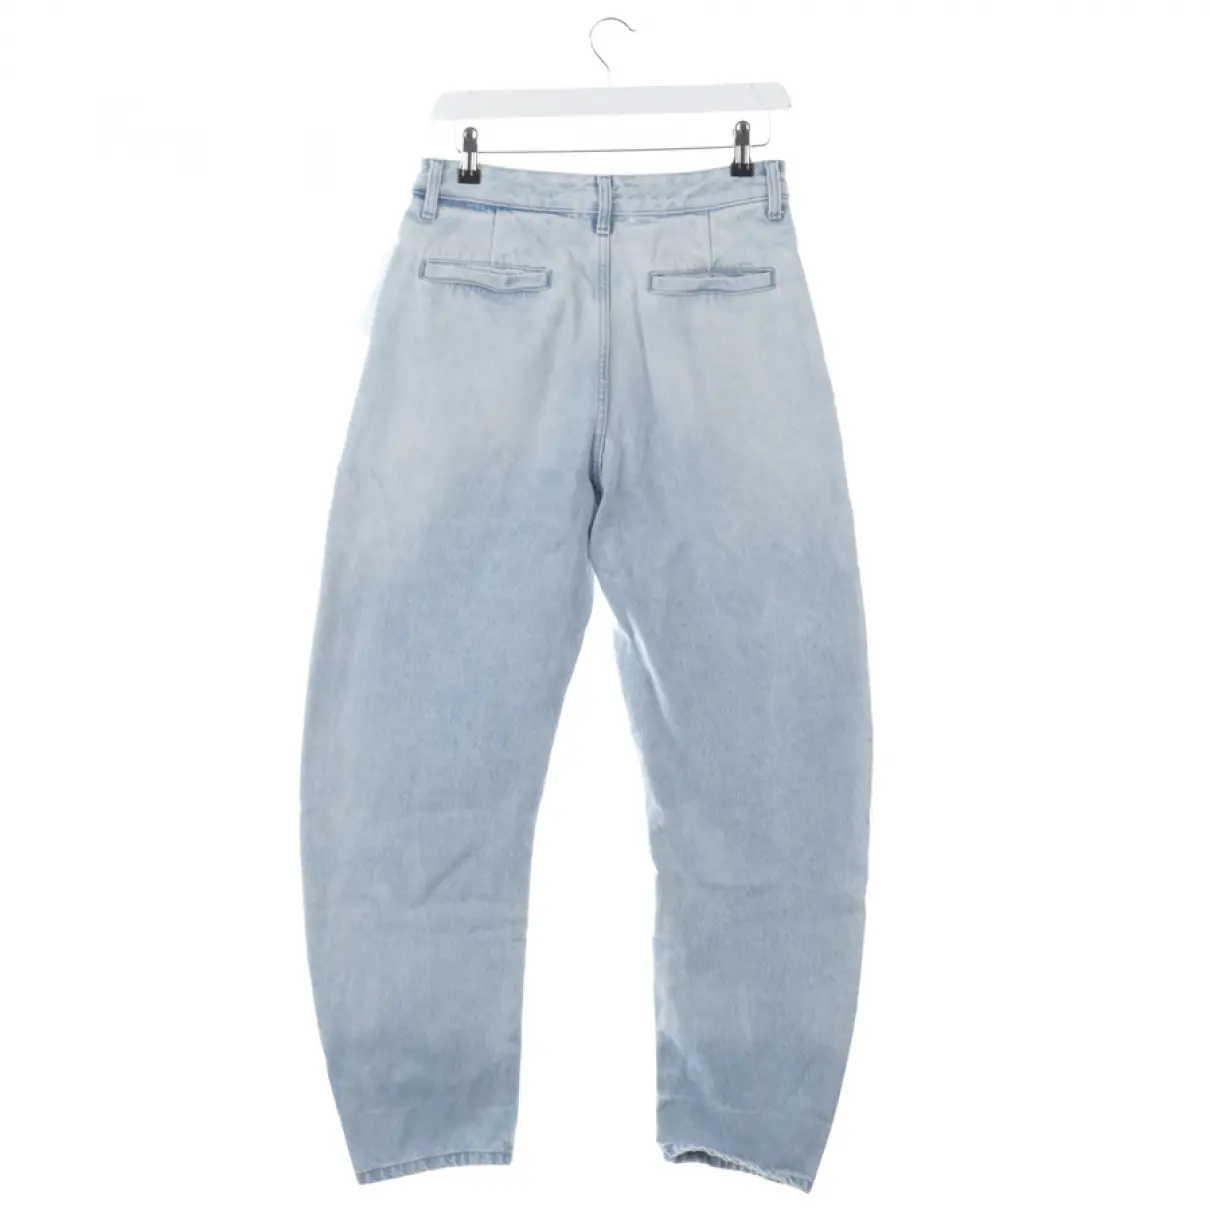 Buy Off-White Boyfriend jeans online